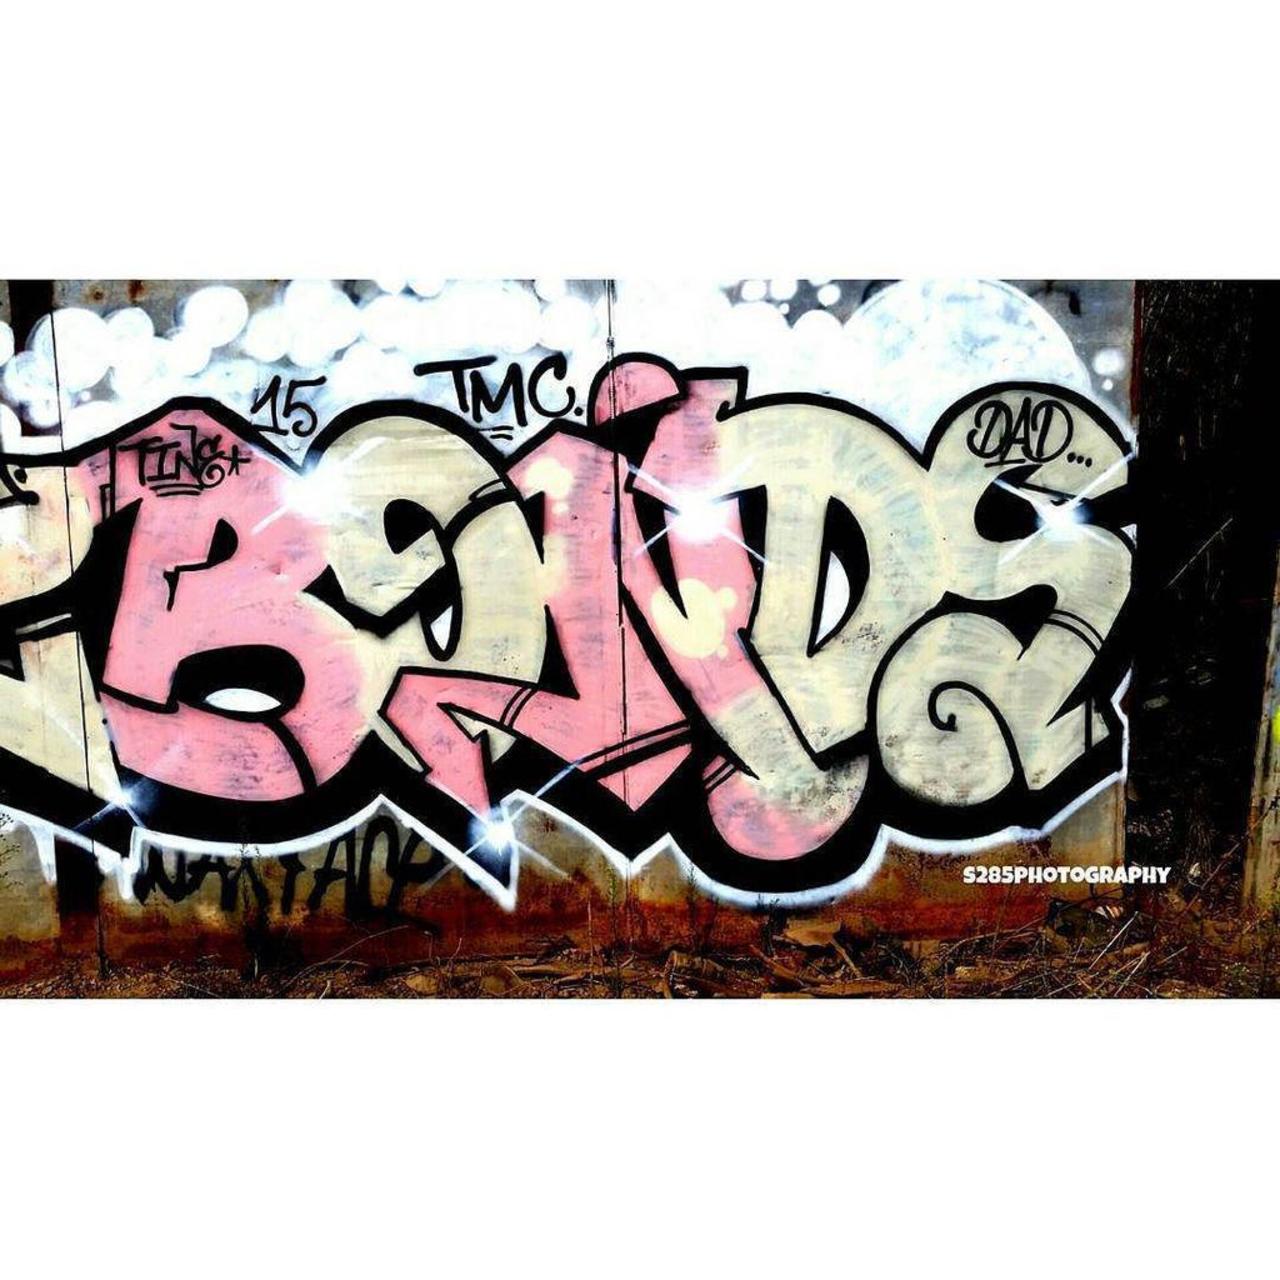 RT @artpushr: via #fresh2defart "http://bit.ly/1R2YaHo" #graffiti #streetart http://t.co/4HhdU0XnVS